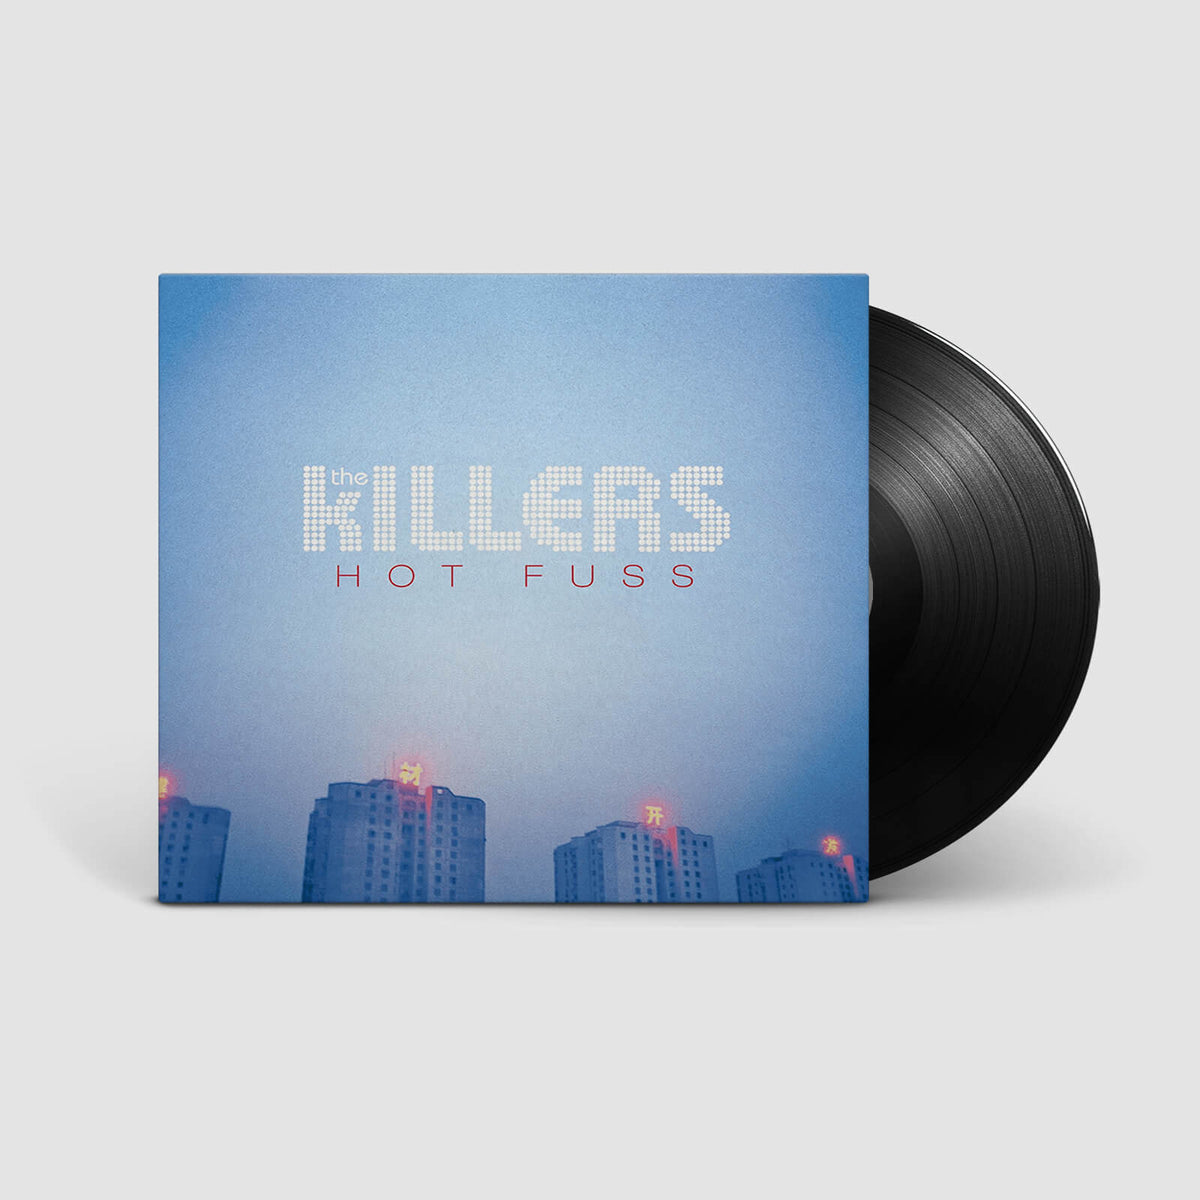 The Killers : Hot Fuss